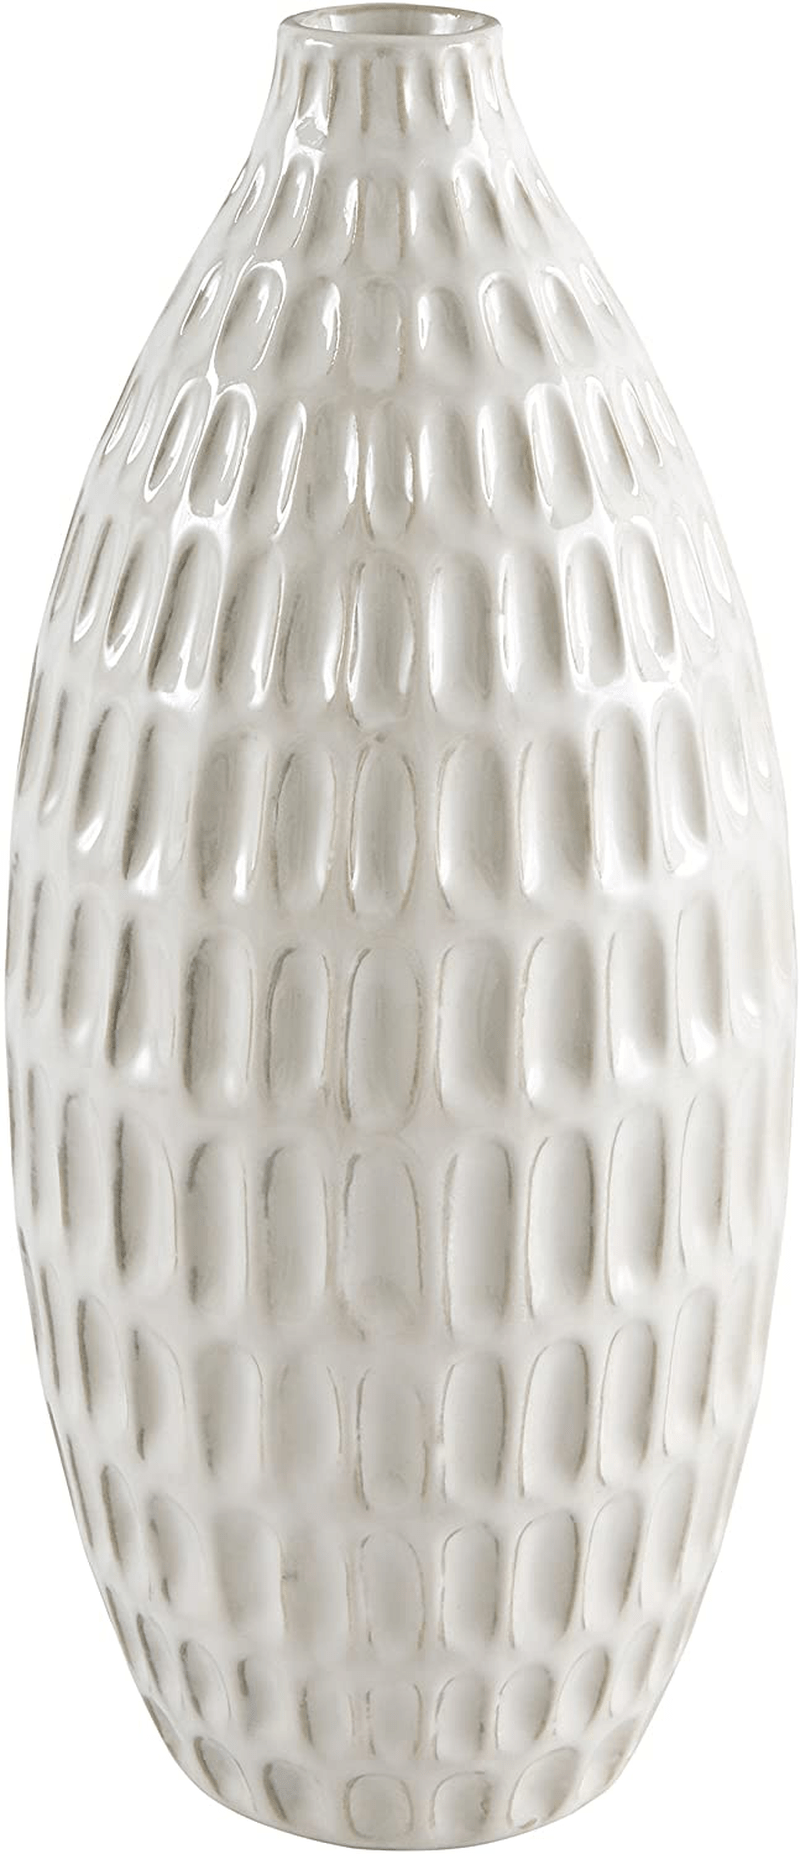 Amazon Brand – Stone & Beam Modern Oval Pattern Decorative Stoneware Vase, 8.75 Inch Height, Off-White Home & Garden > Decor > Vases Stone & Beam Large  